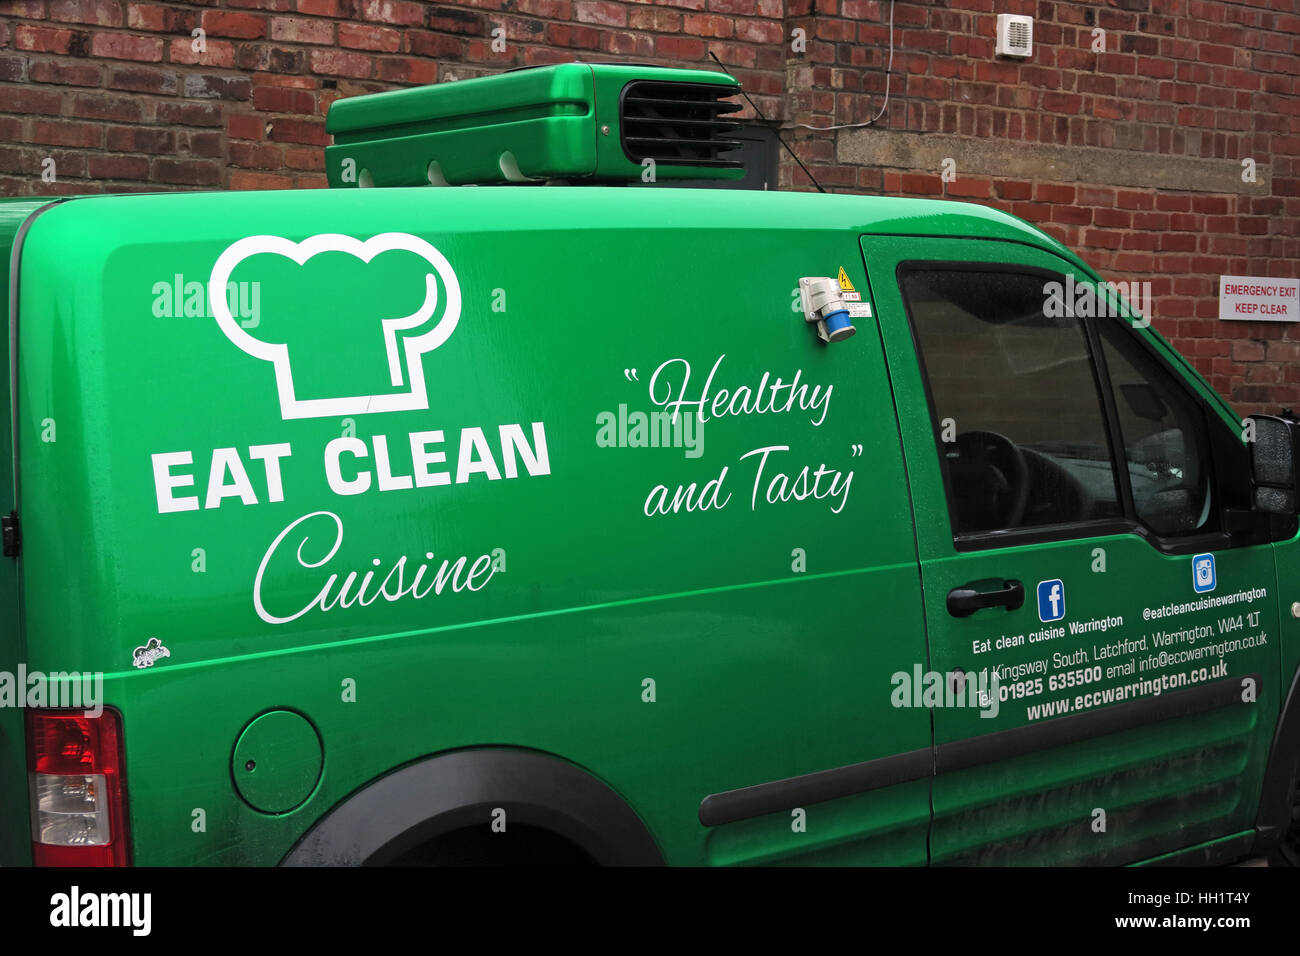 Eat Clean Craze Cafe,Warrington,Cheshire,England,UK - Eat Clean Cuisine Latchford - Green delivery van Stock Photo